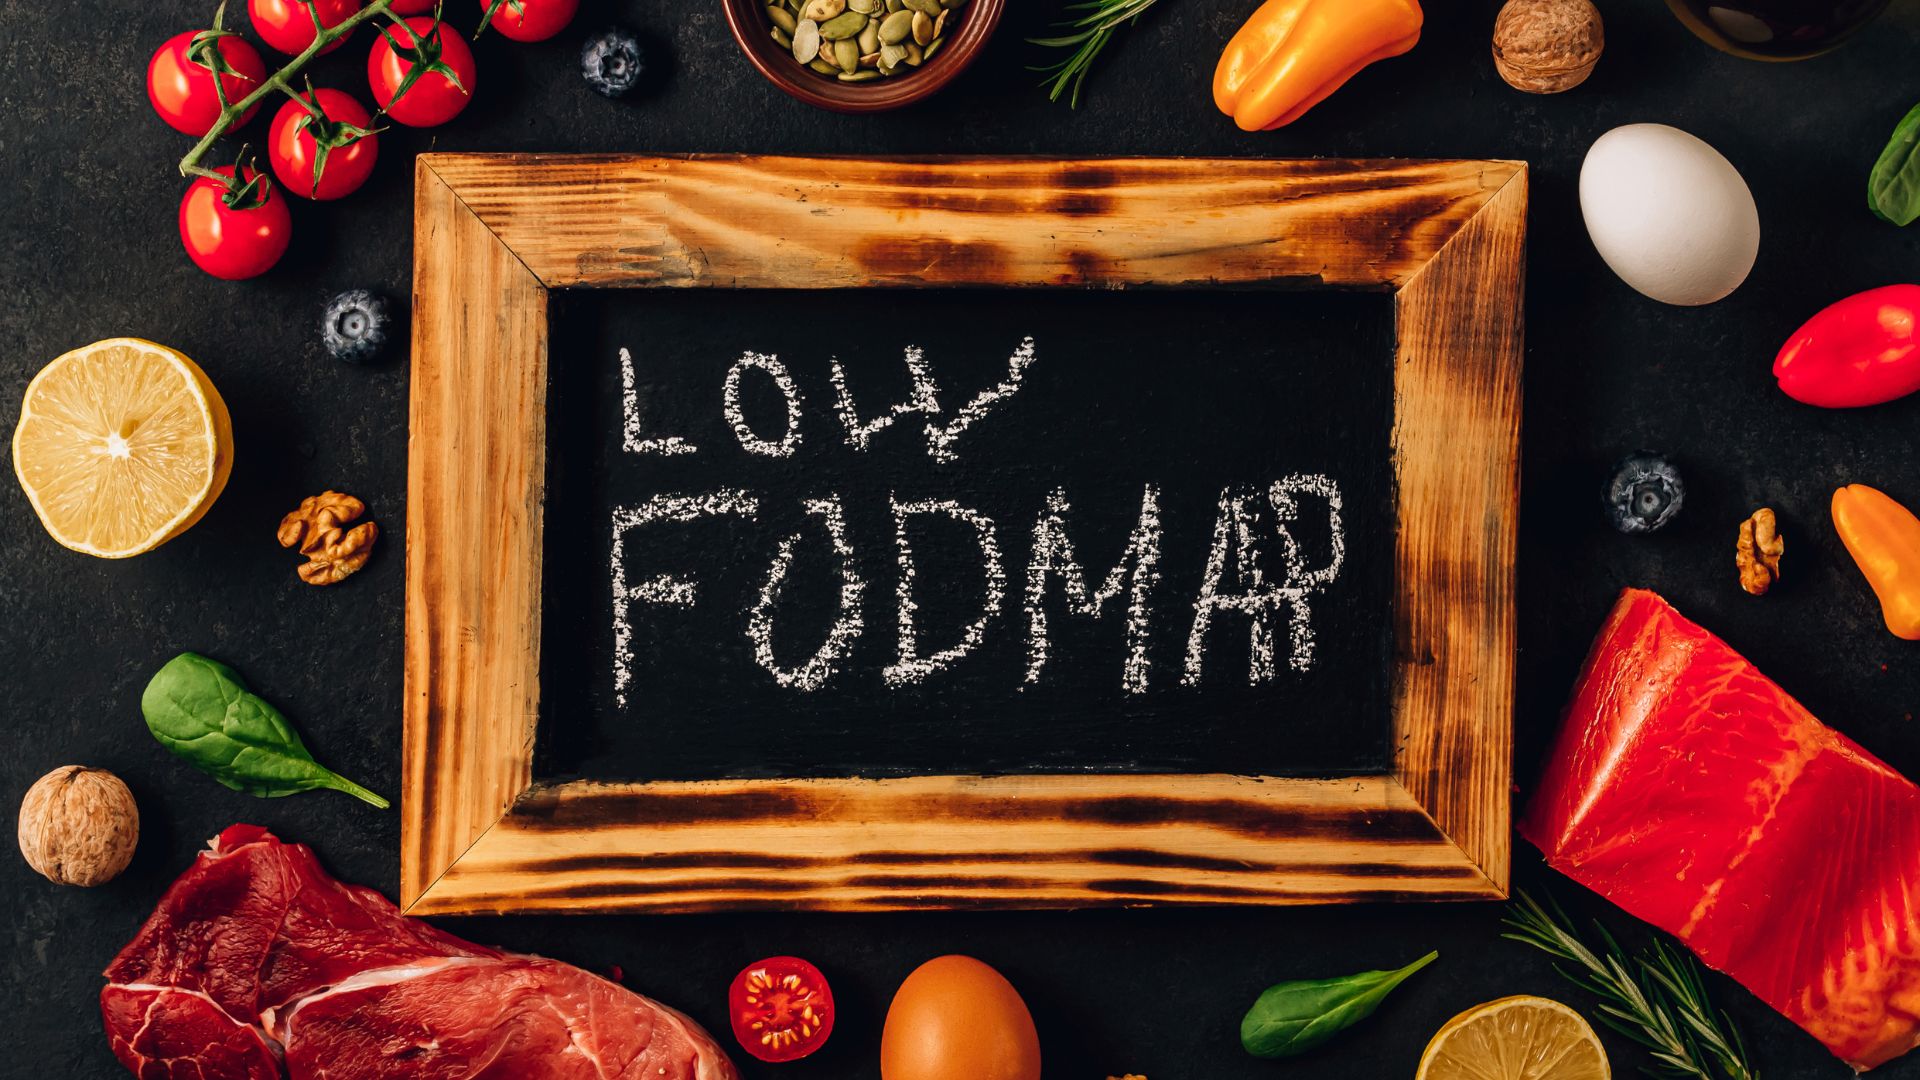 Dieta Low FODMAP – Twój kompletny przewodnik